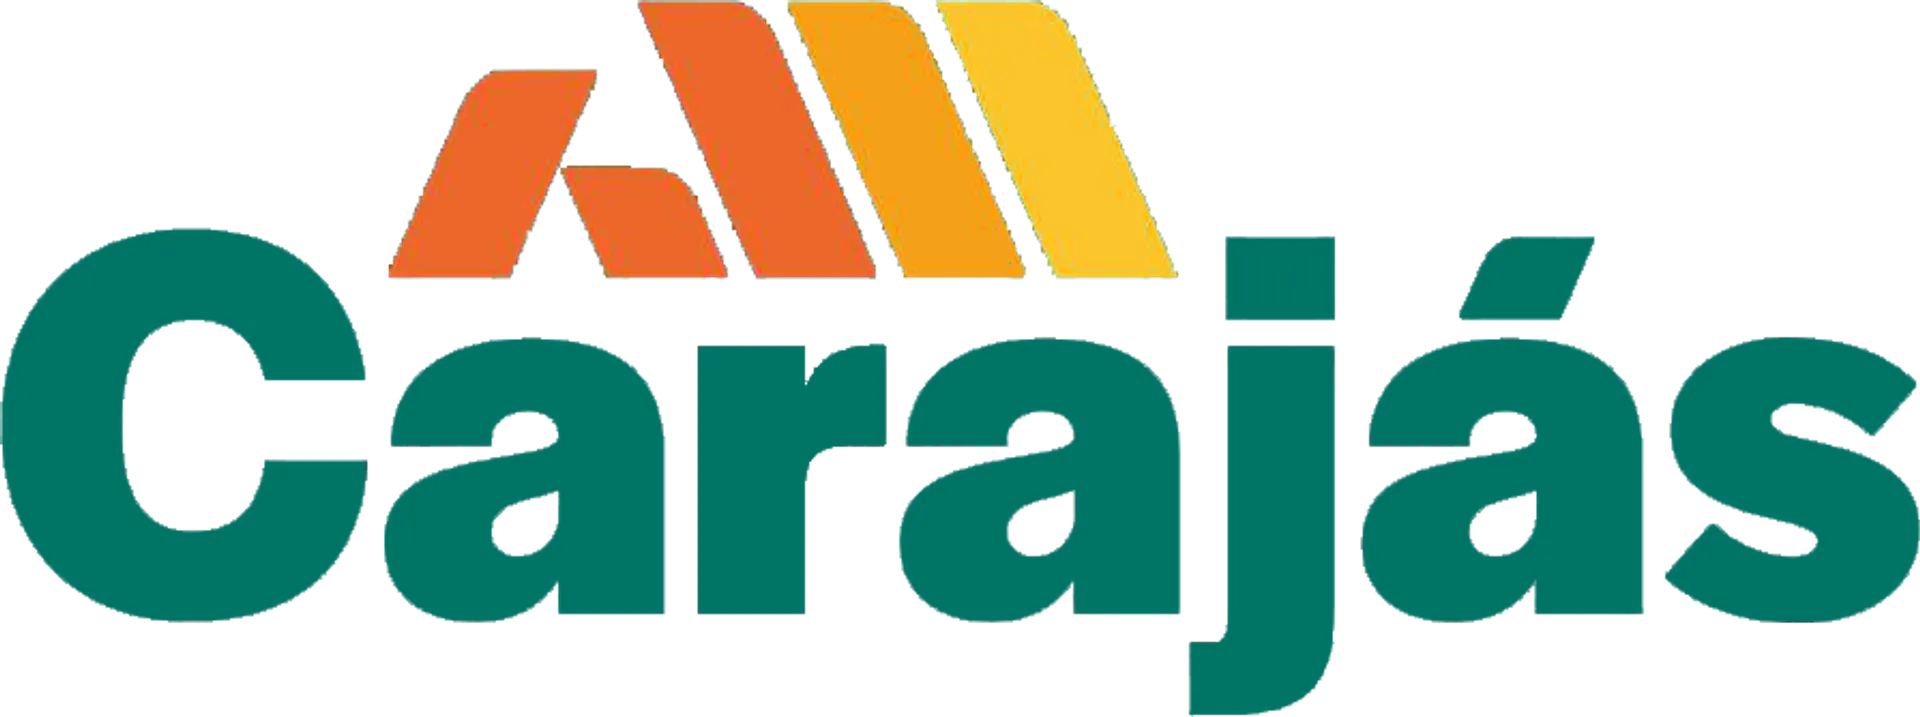 CARAJÁS logo